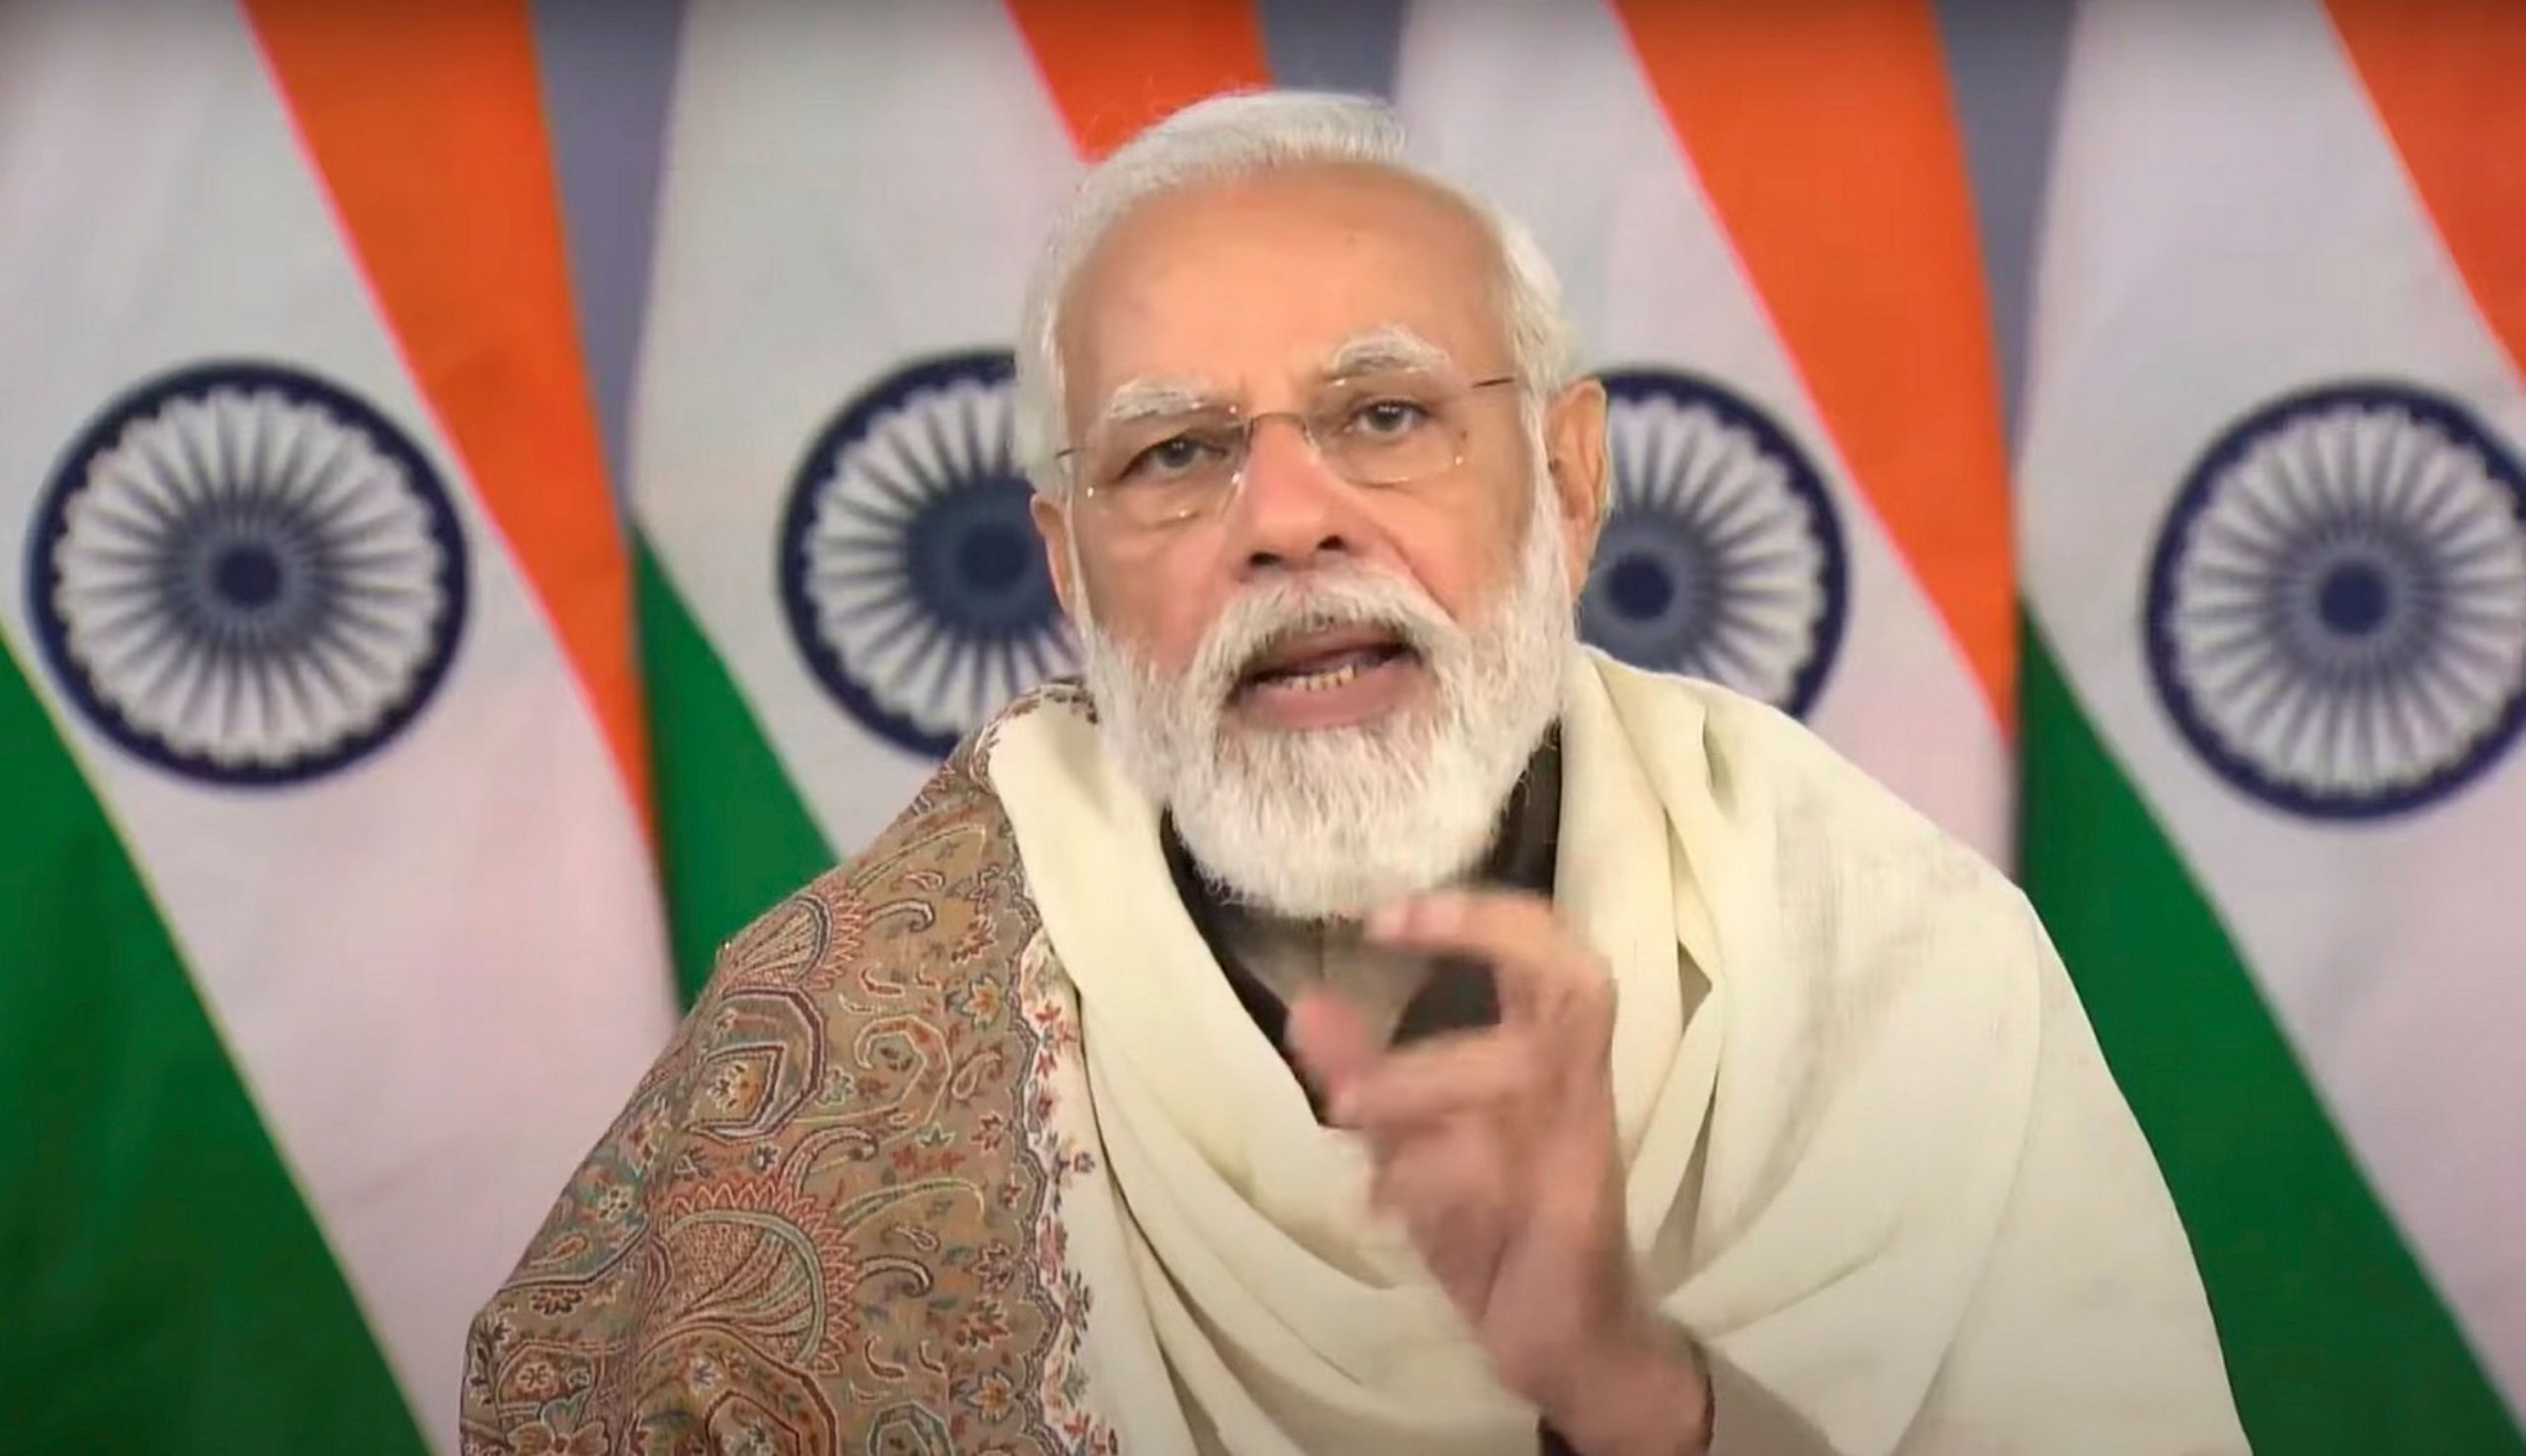 Highlights: PM Modi’s ‘bouquet of hope’ speech at World Economic Forum